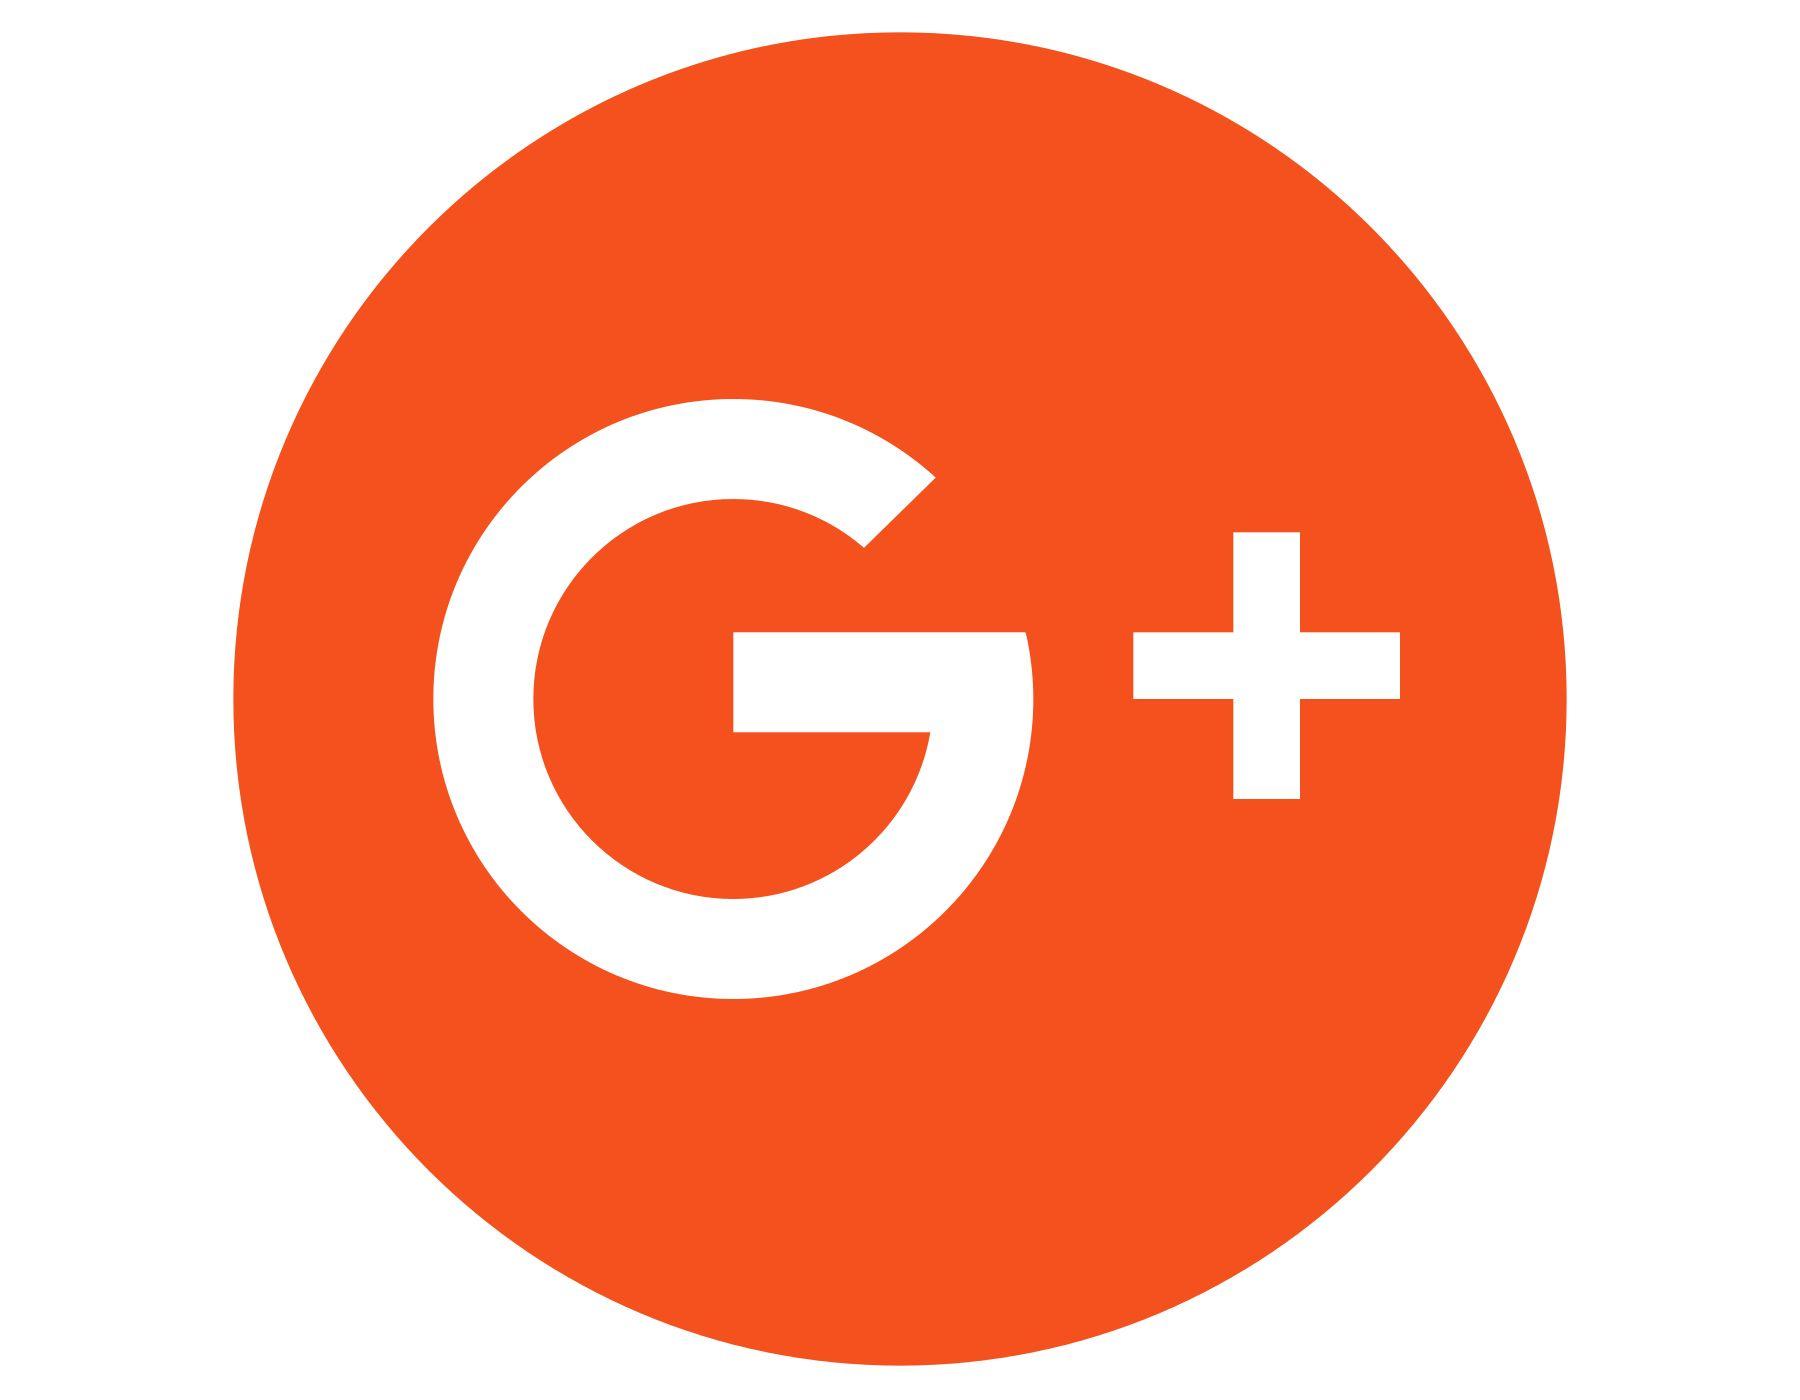 Ggogle Logo - Google Logo, Google Symbol Meaning, History and Evolution